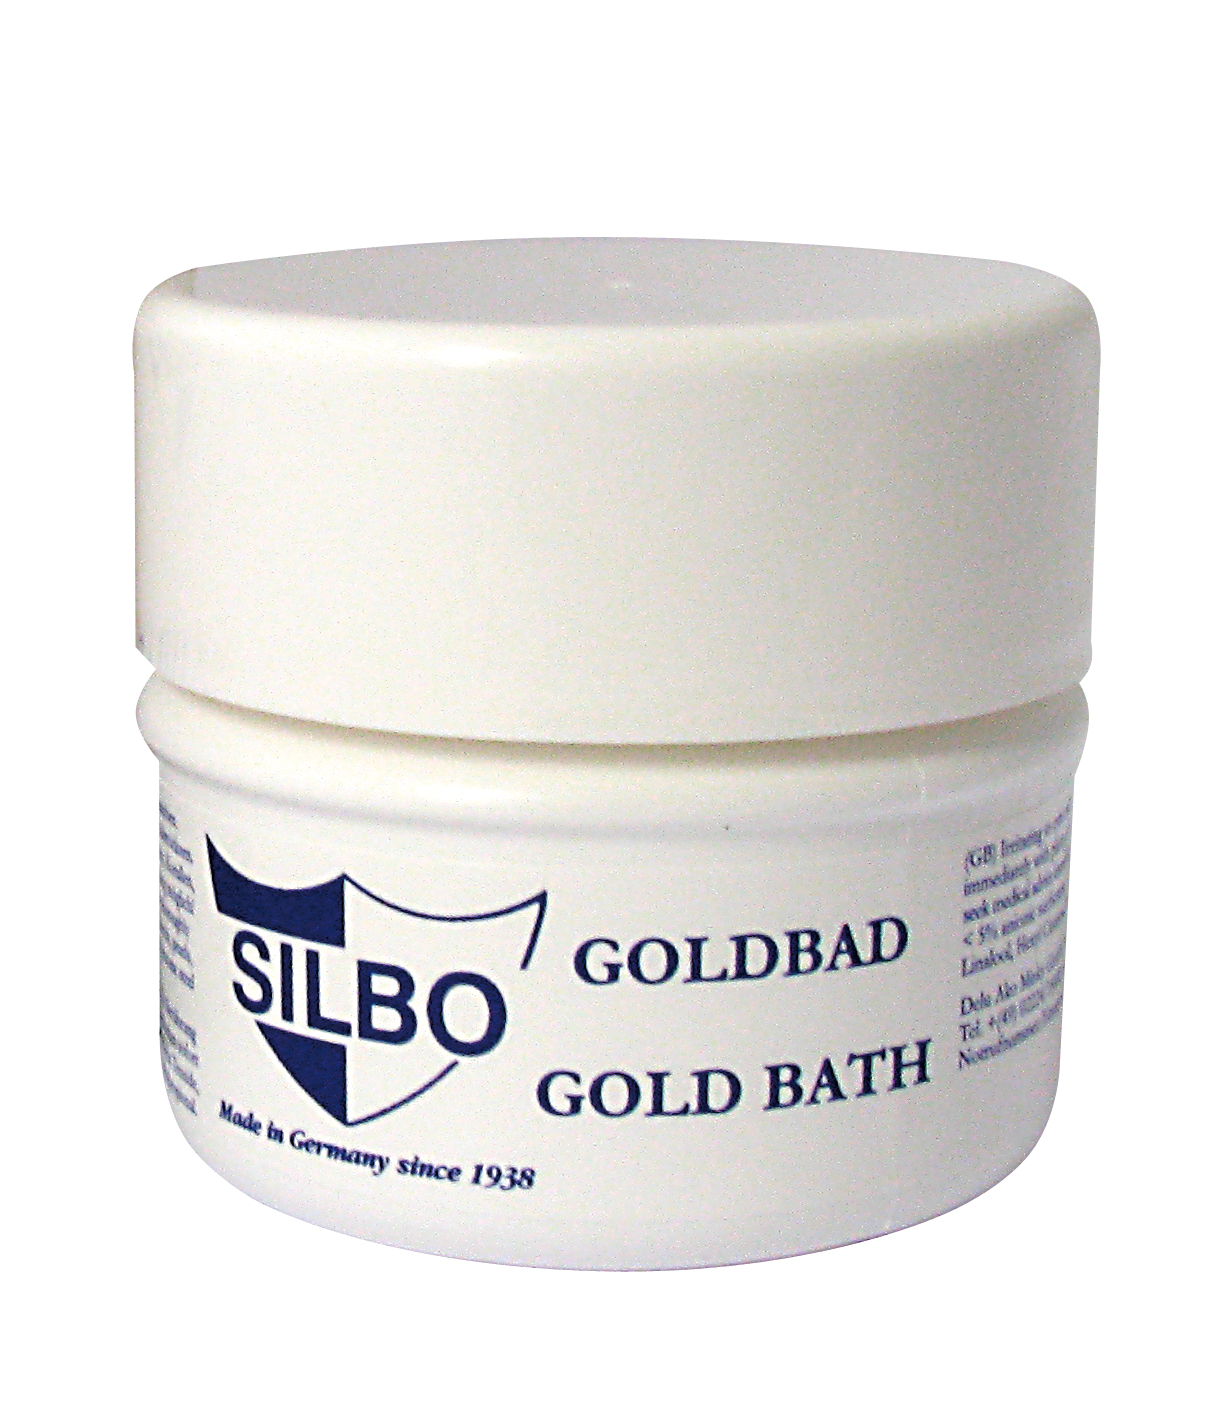 Gold immersion bath, 200 ml Vido